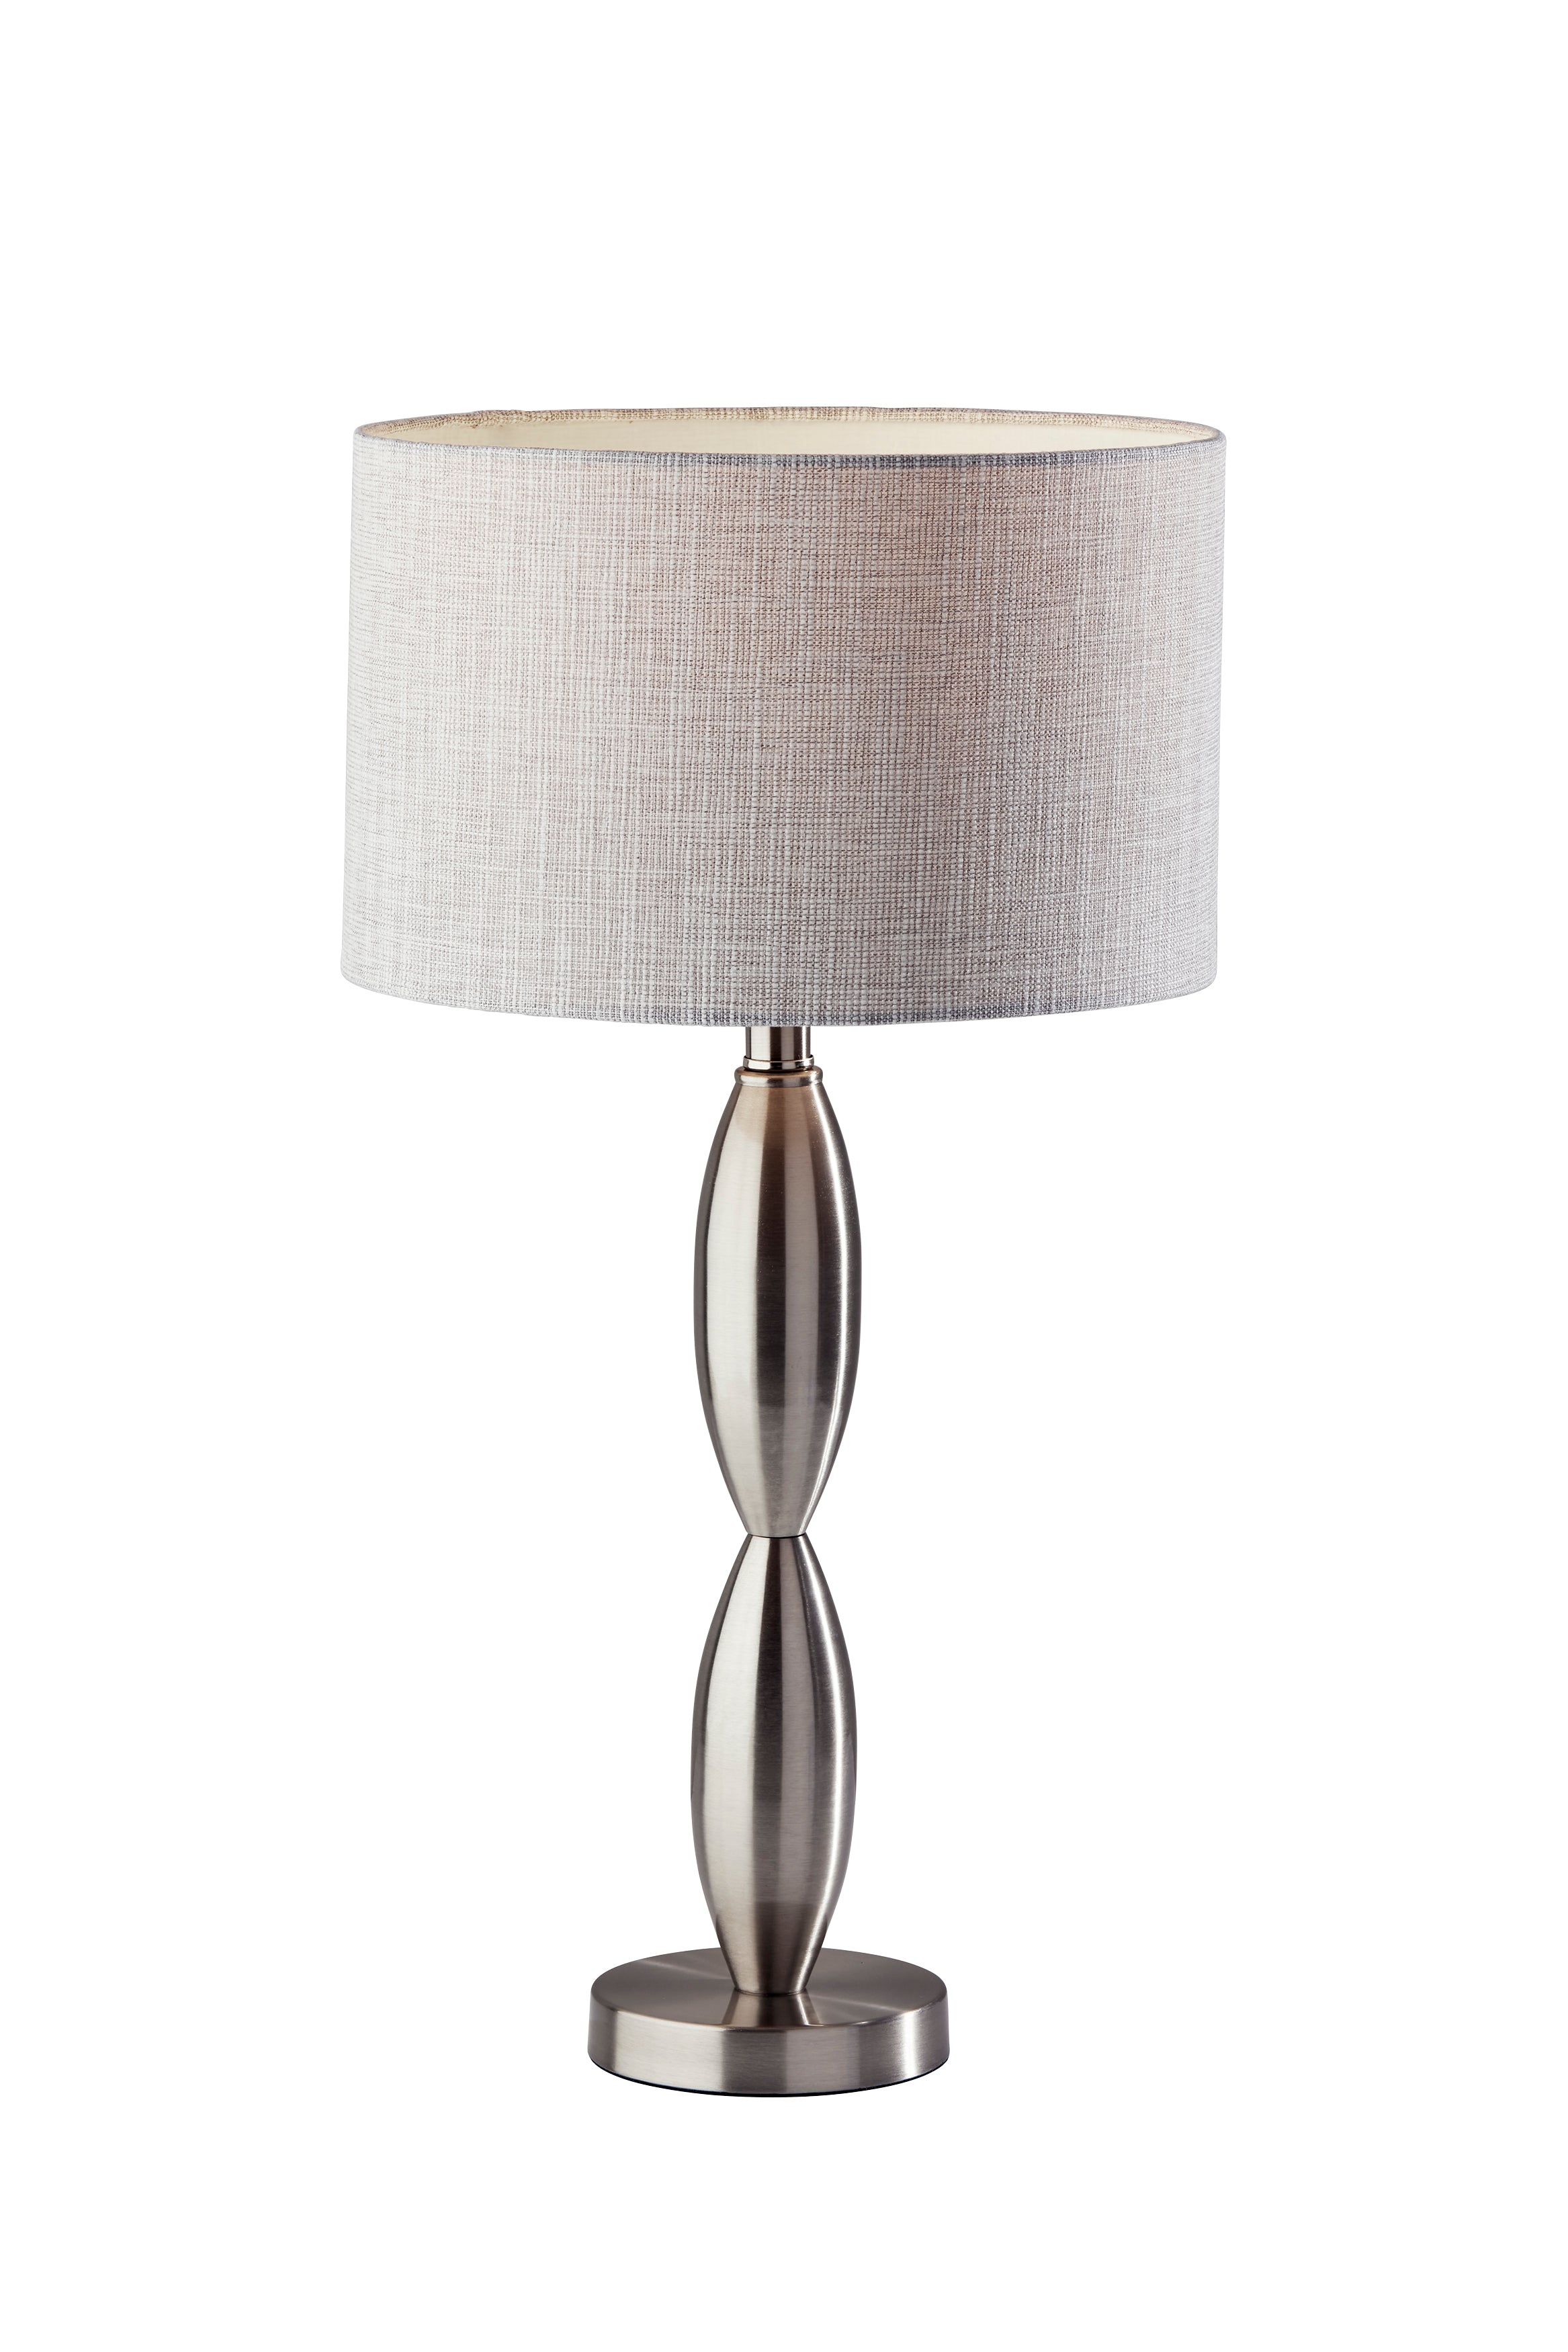 LANCE Lampe sur table Nickel - 1602-22 | ADESSO